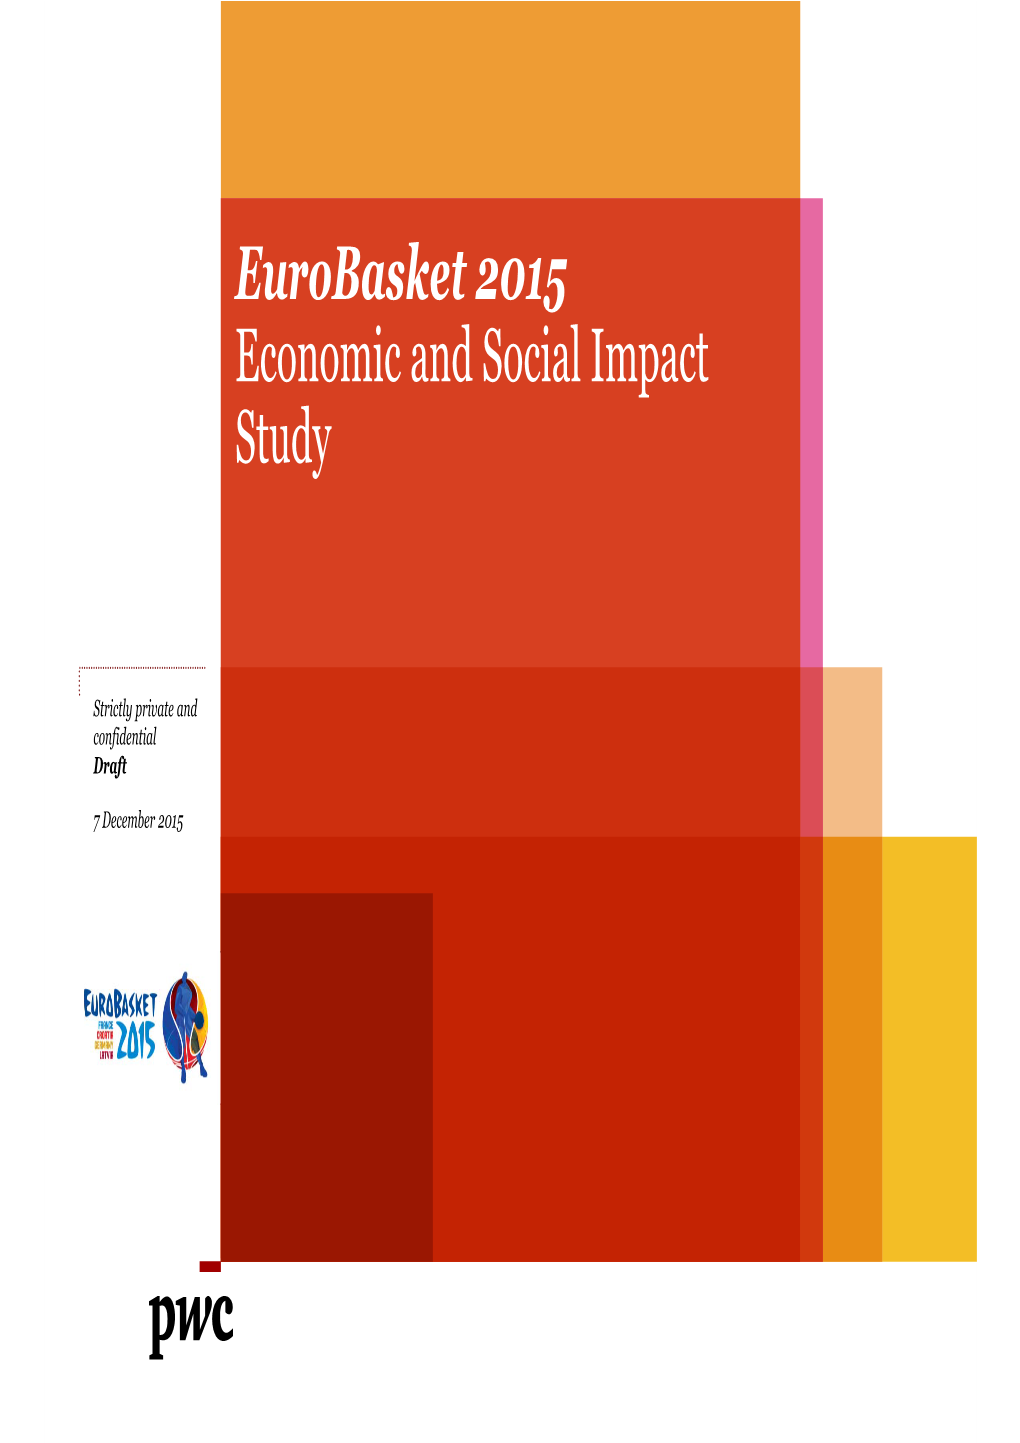 Eurobasket 2015 Economic and Social Impact Study